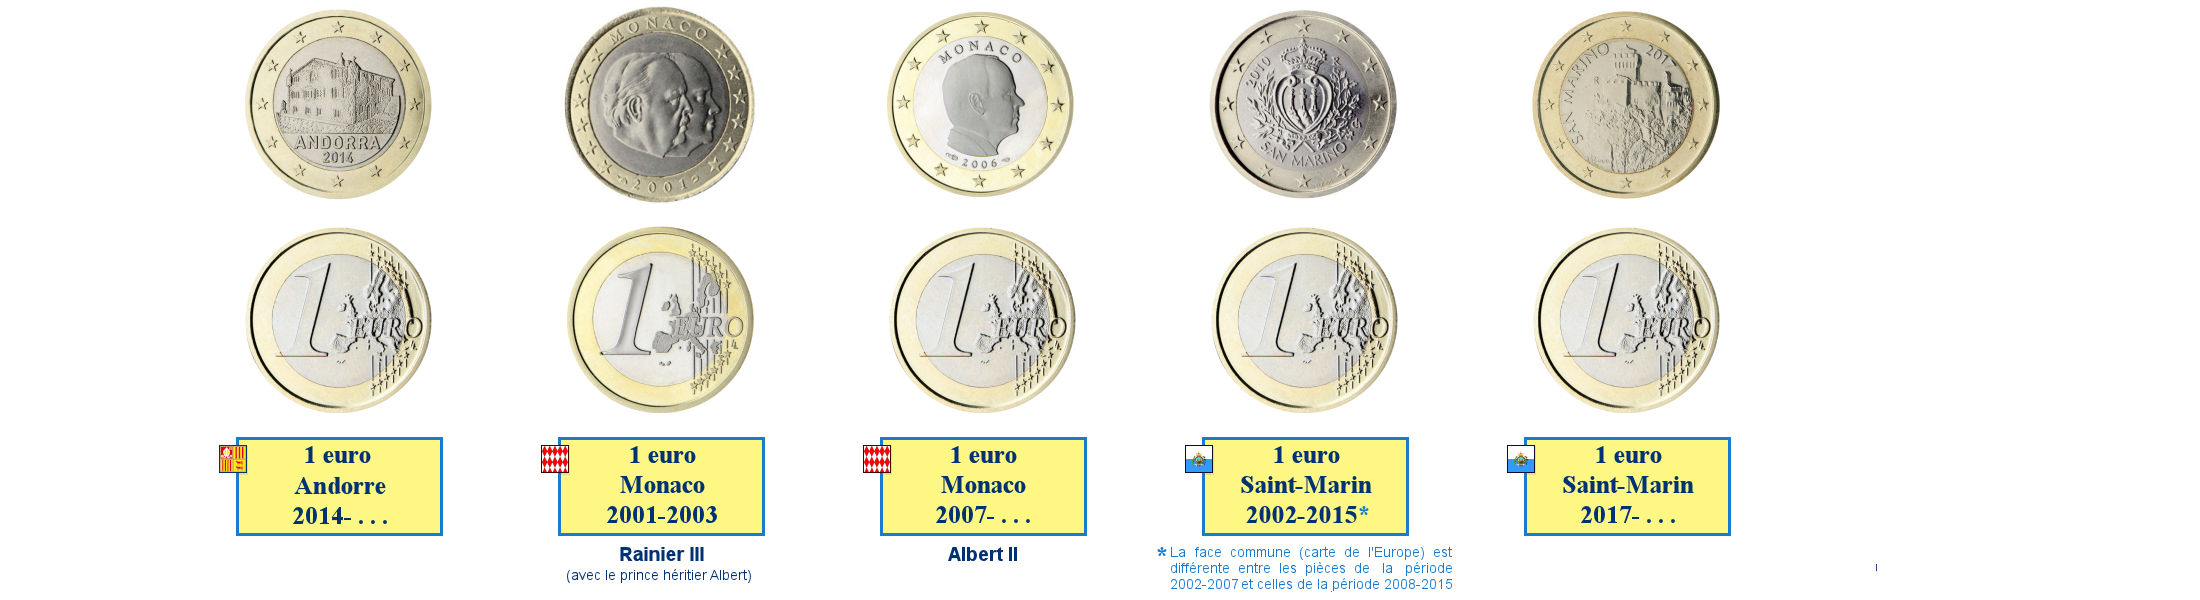 Photos de pièces de 1 euro d'Andorre, de Monaco et Saint-Marin